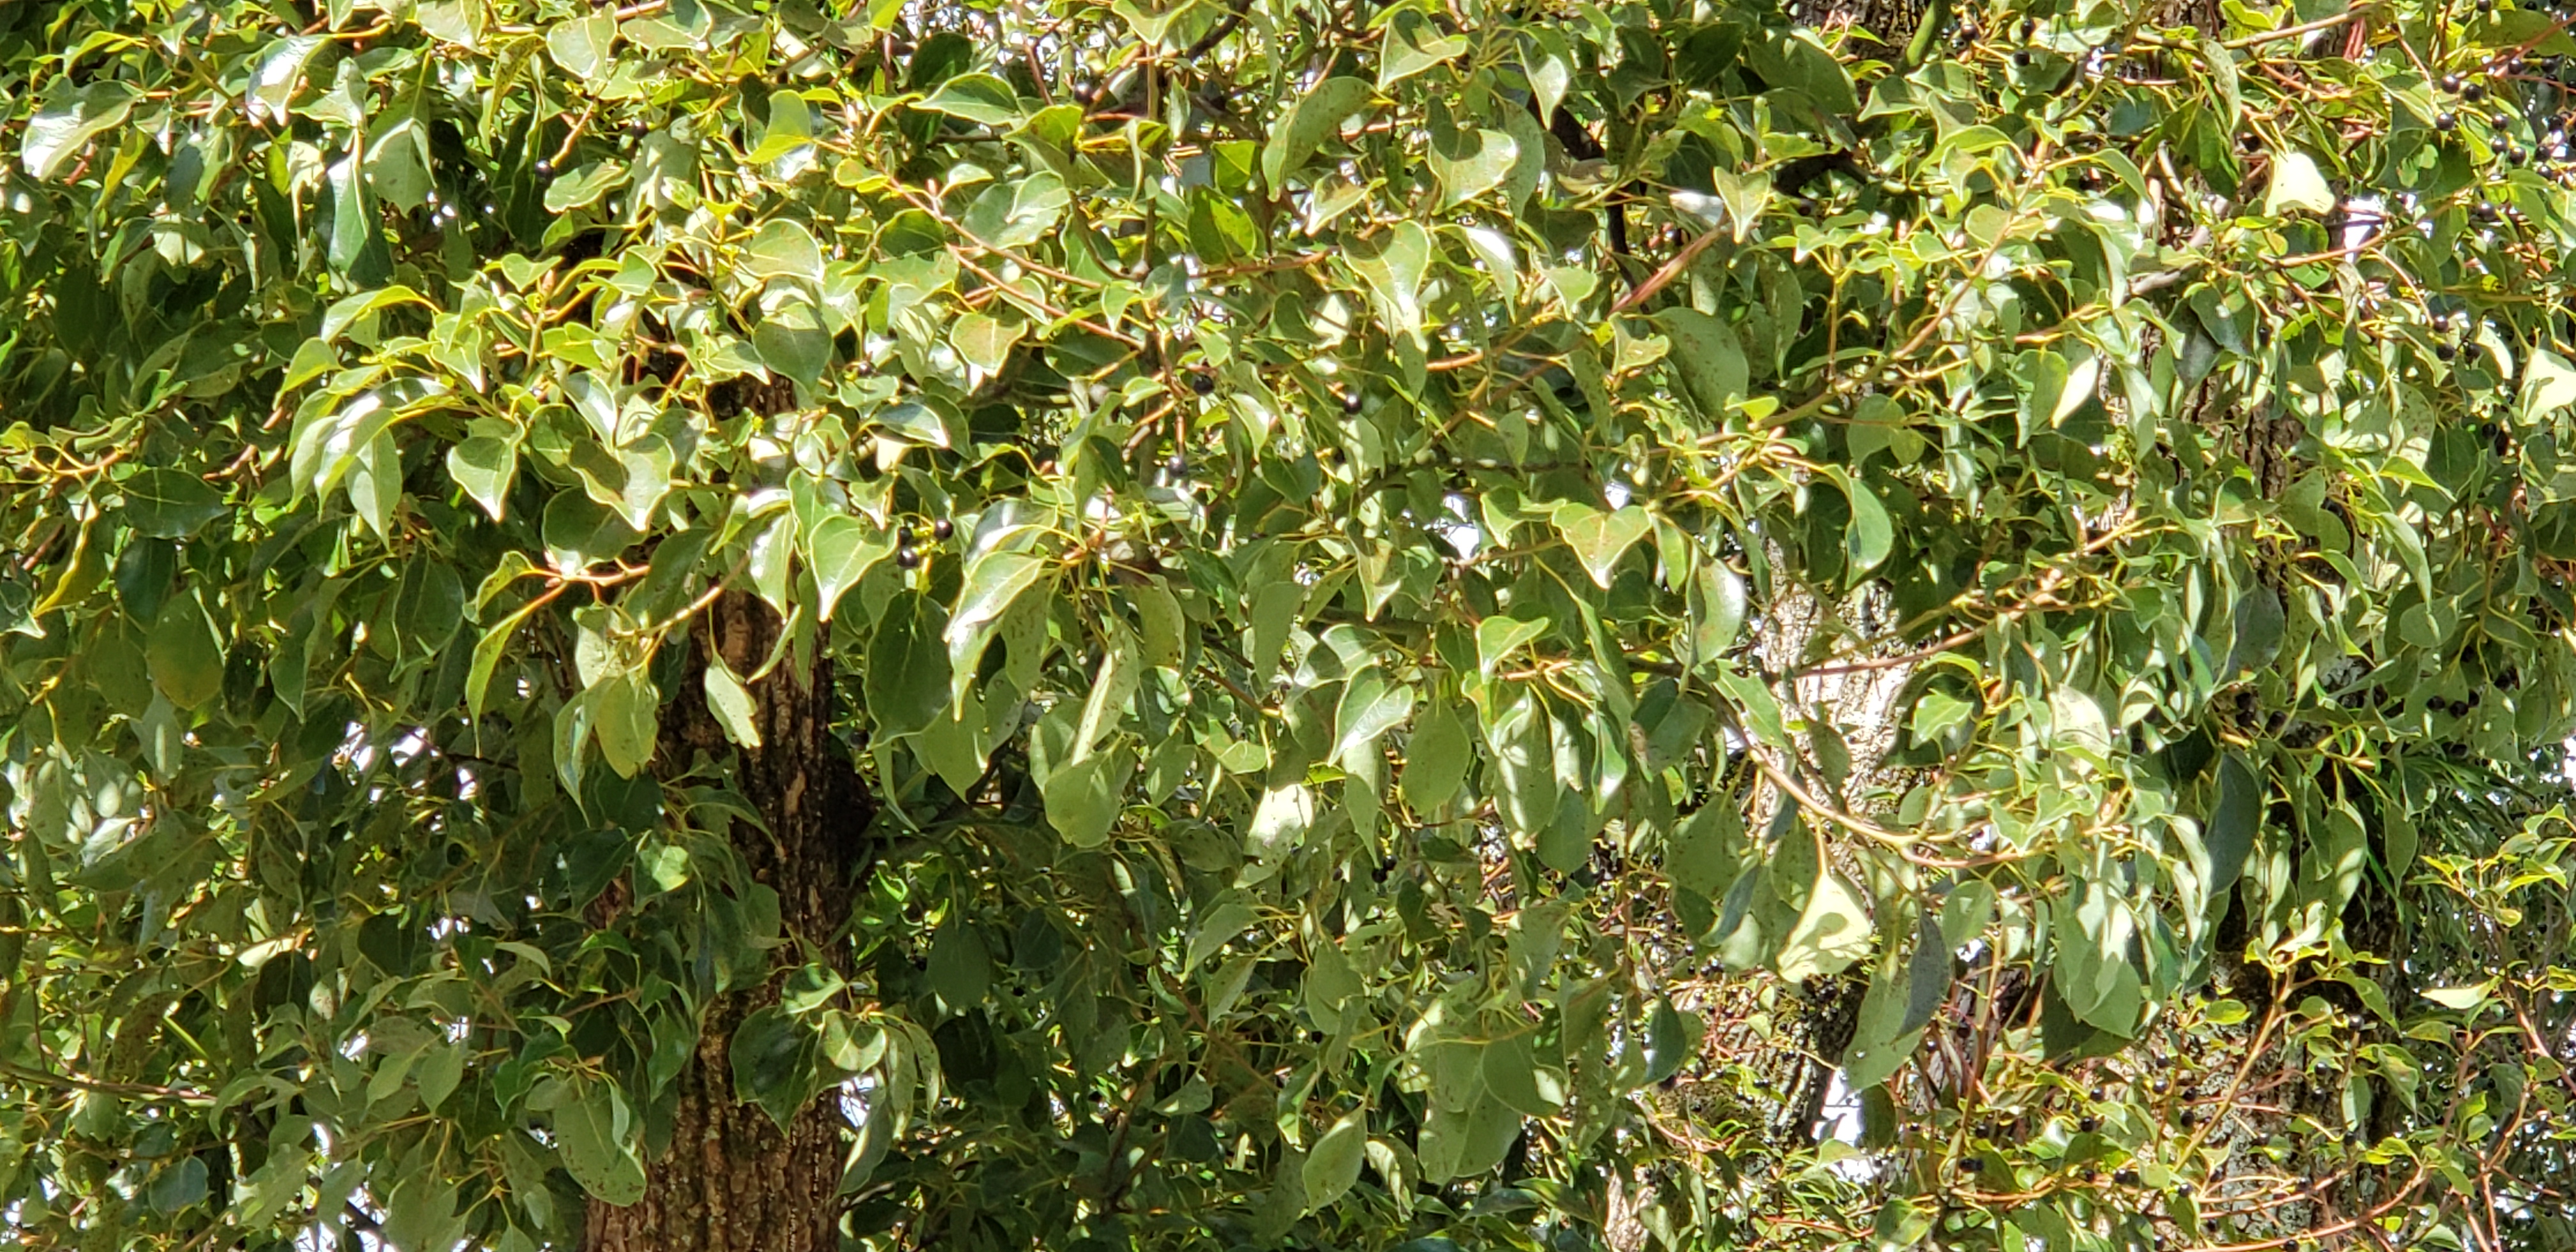 Cinnamomum camphora plantplacesimage20181208_090817.jpg